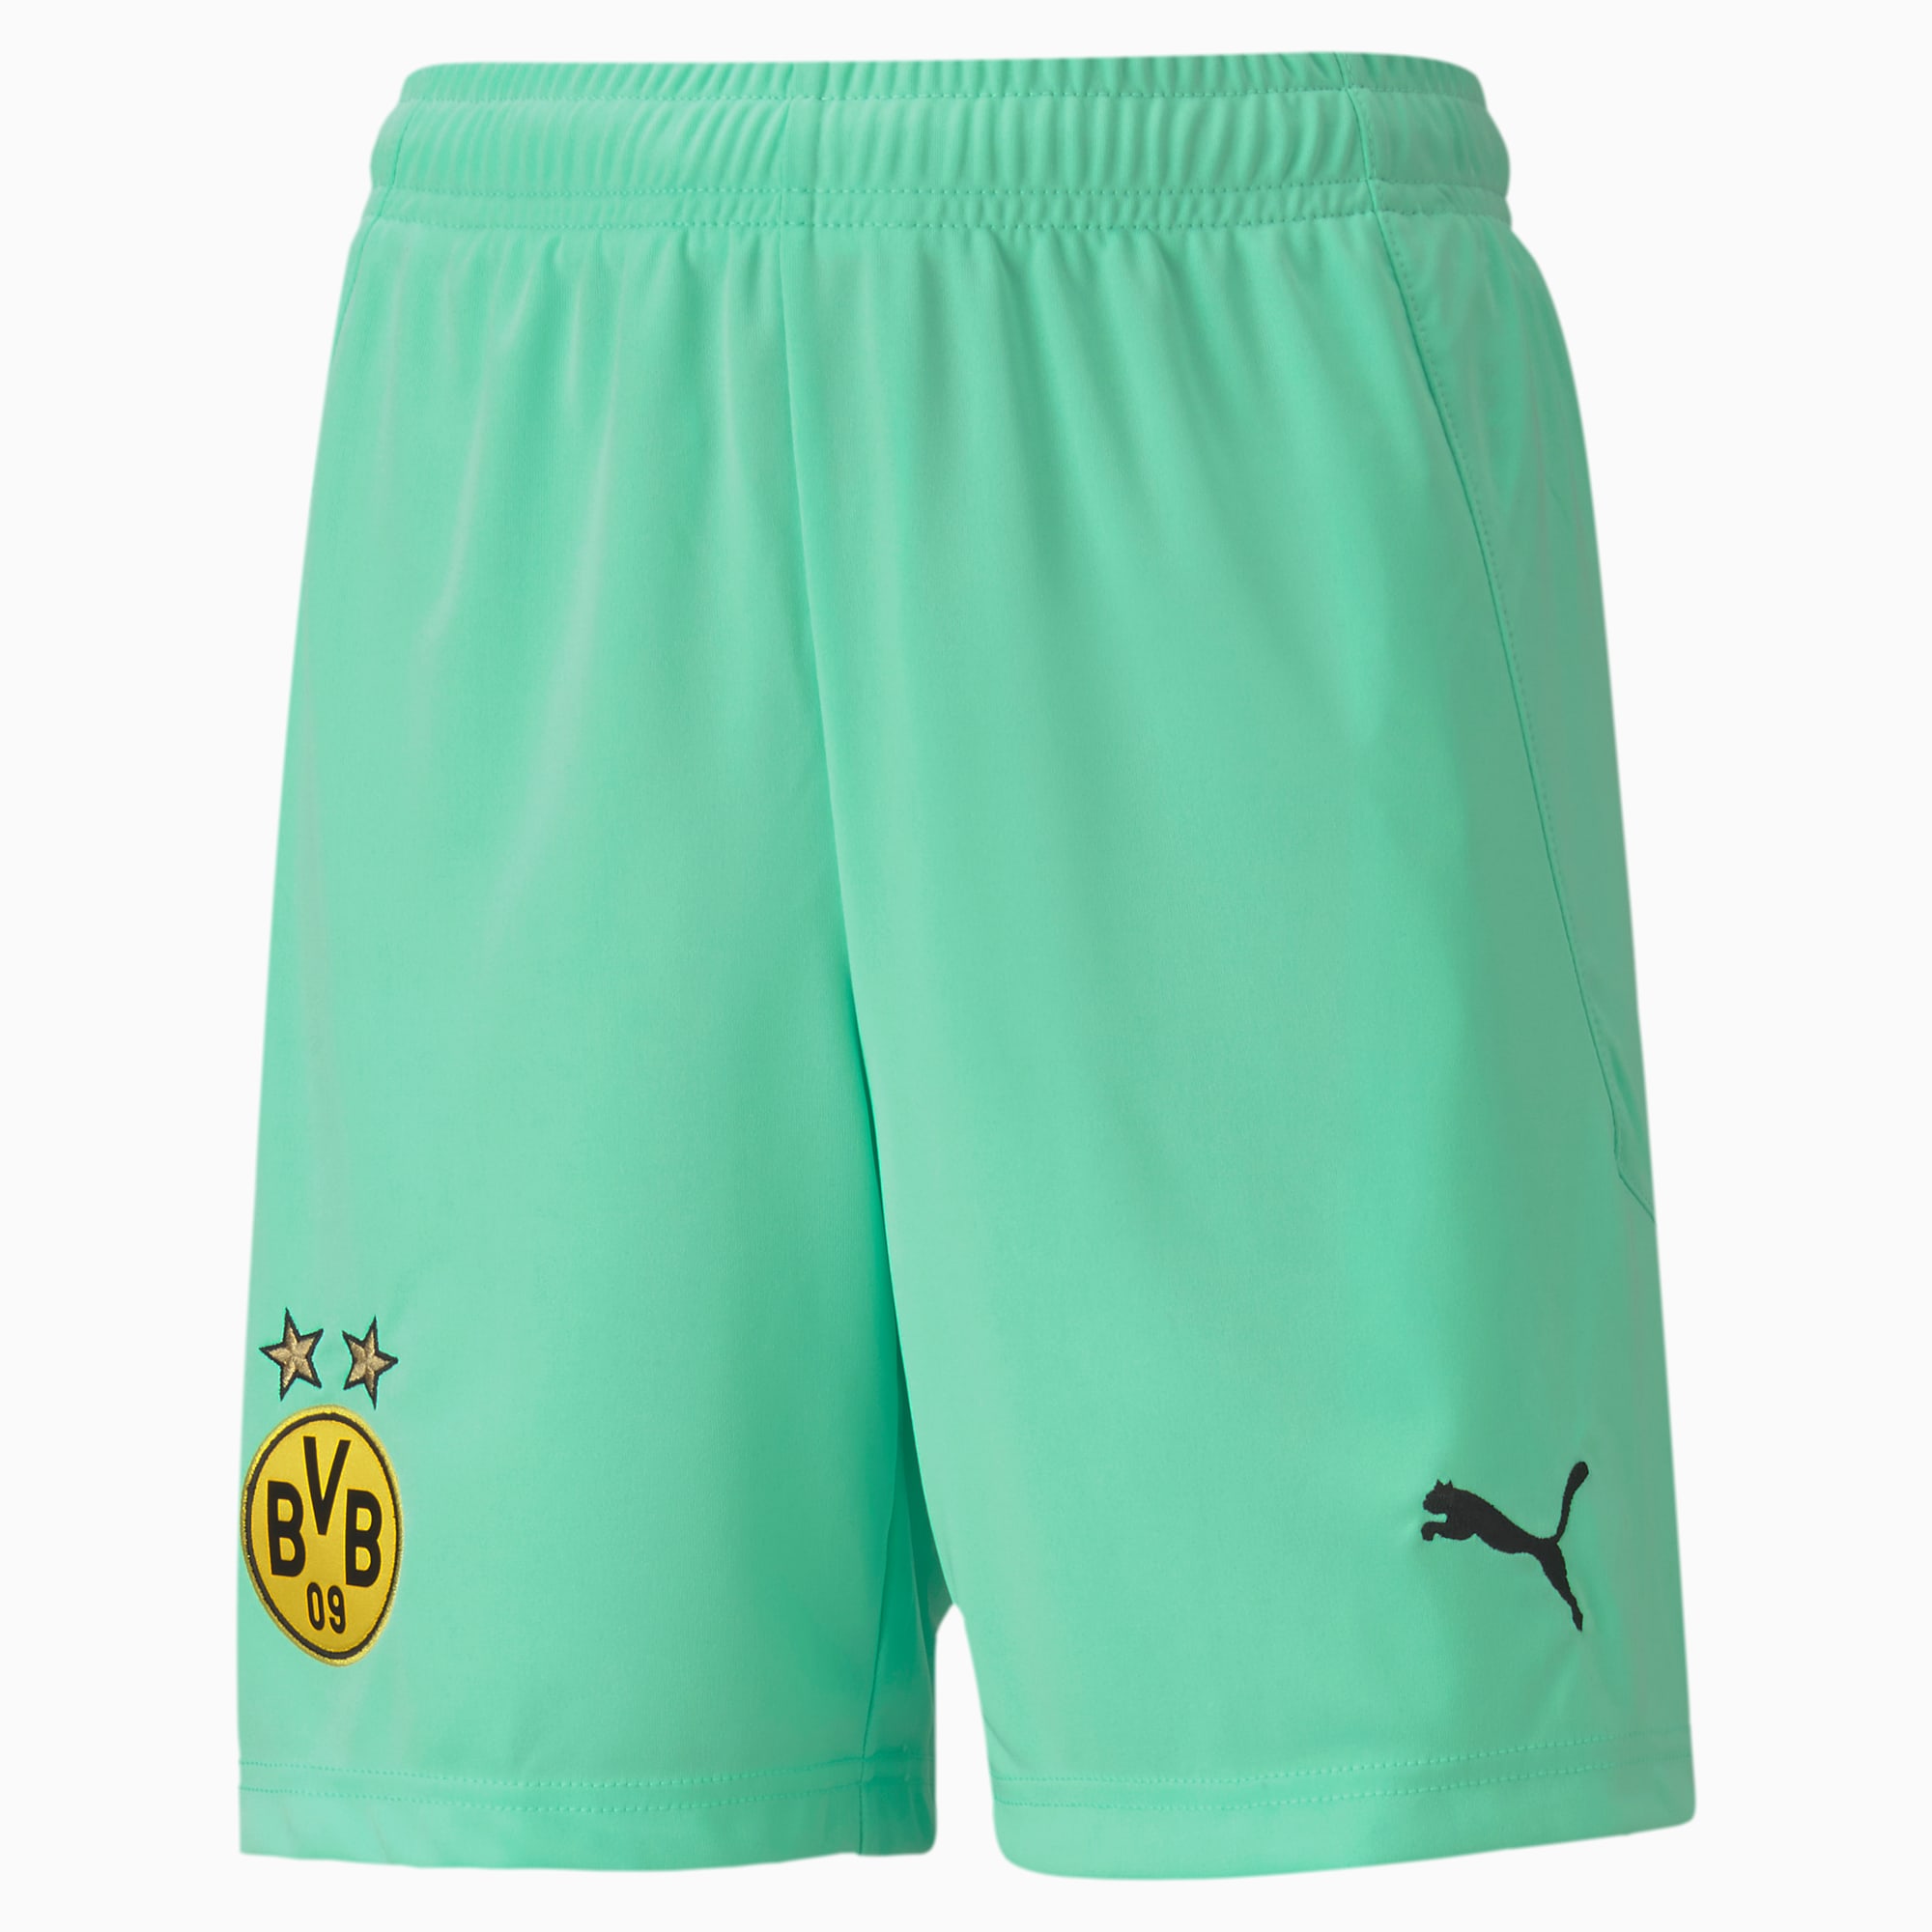 puma goalkeeper shorts